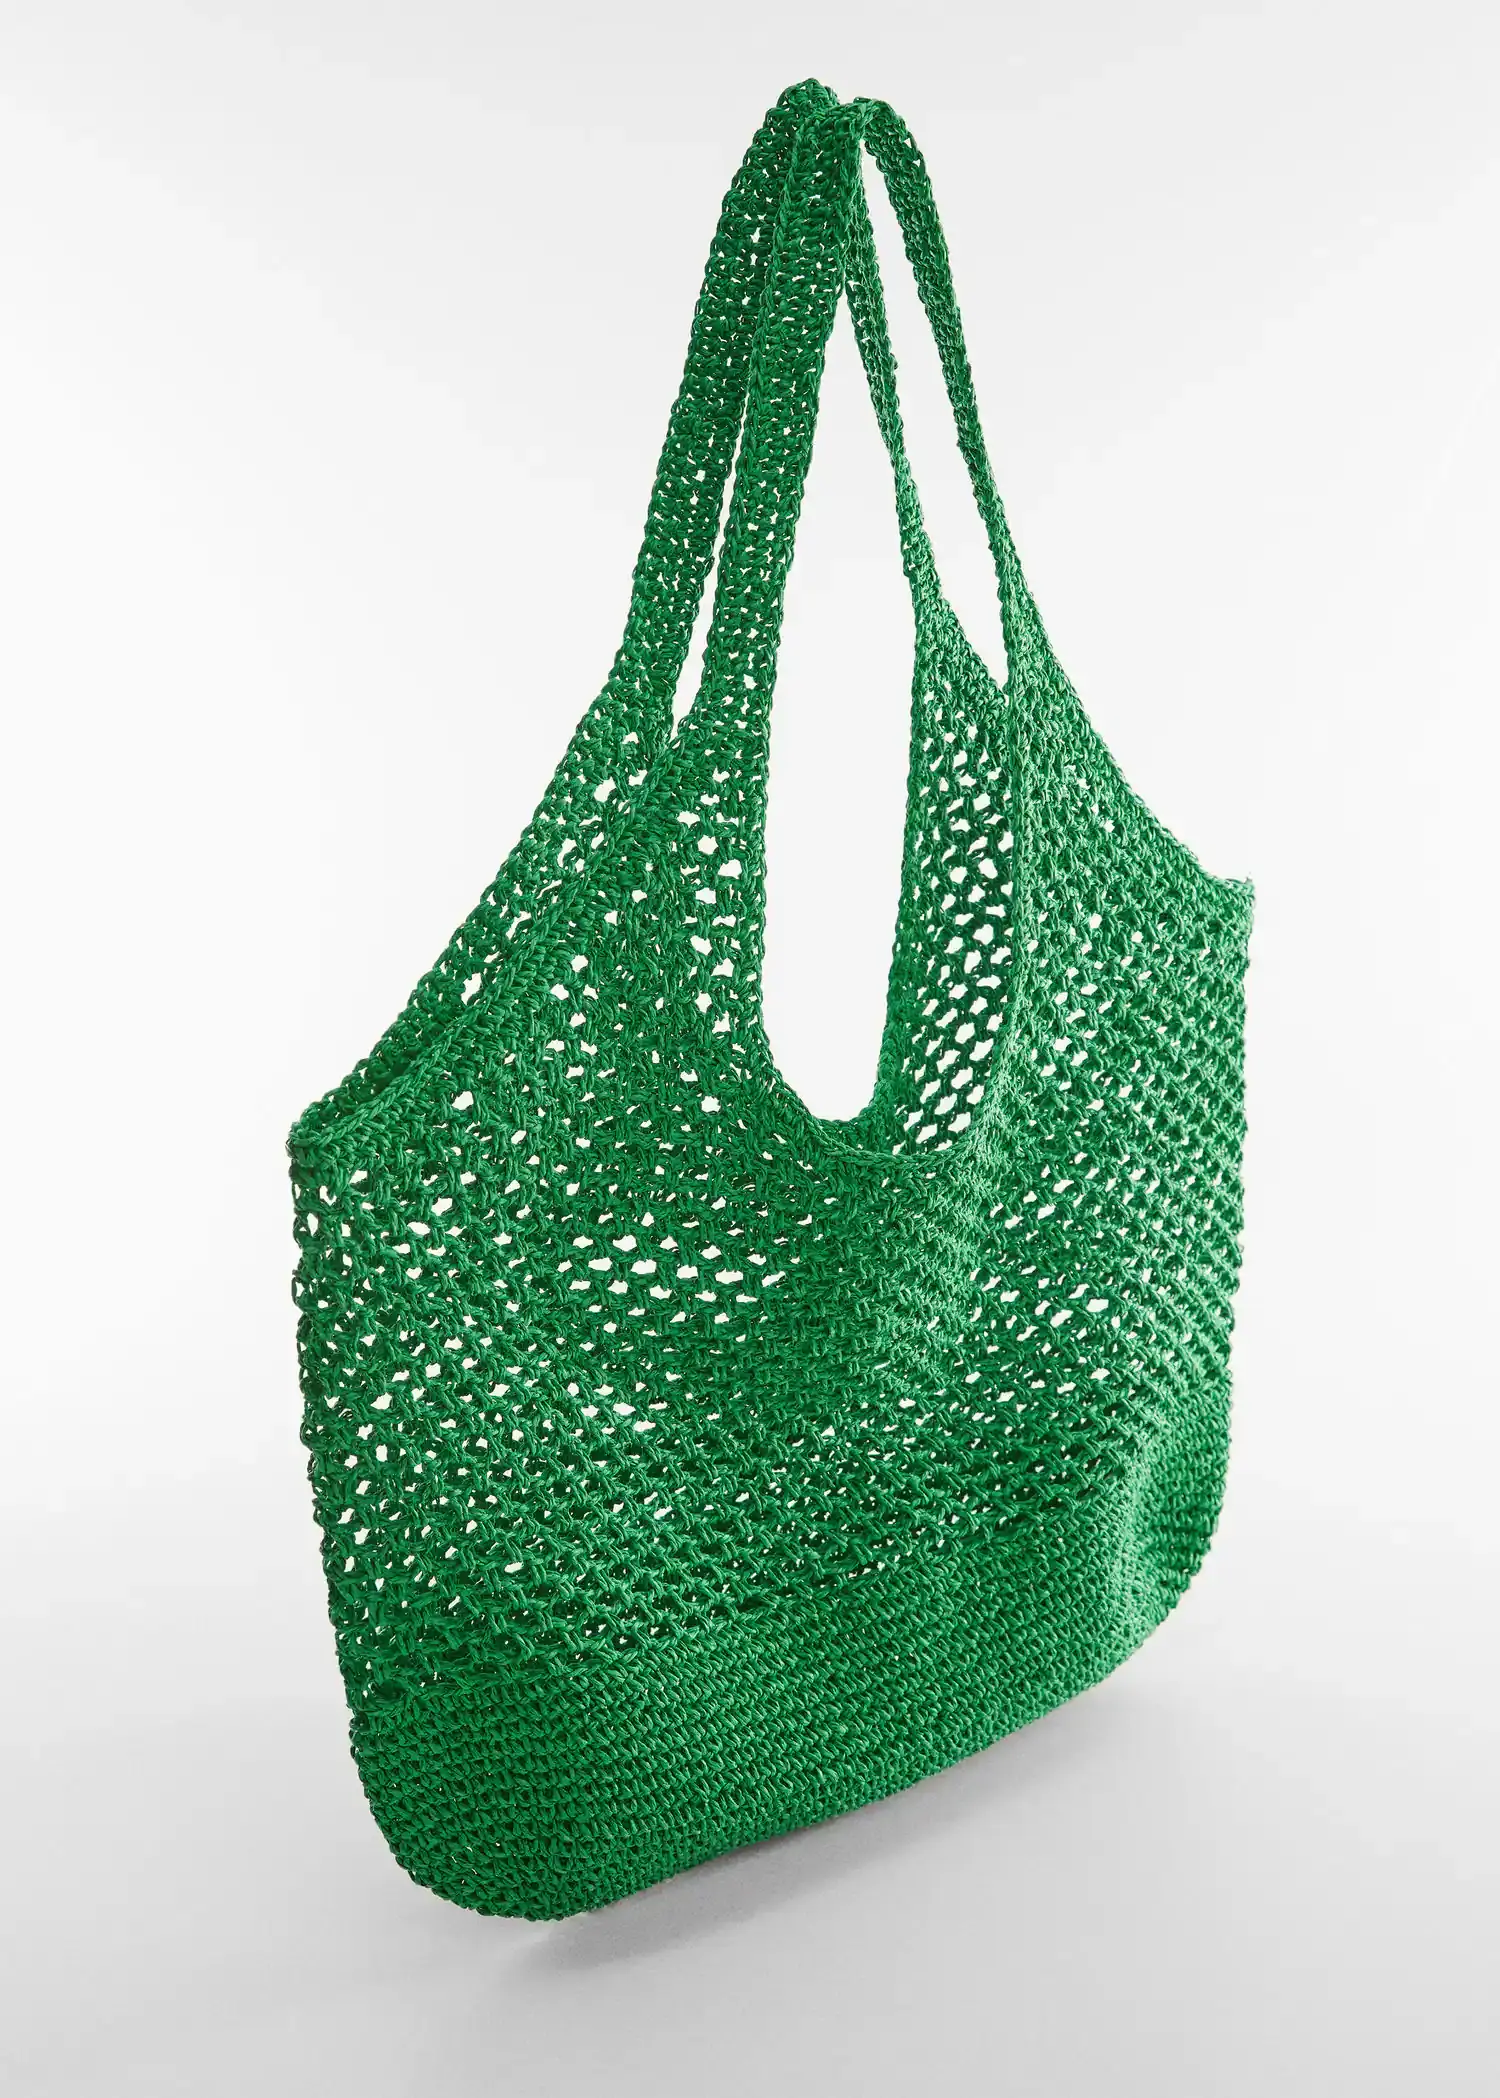 Mango Natural fibre sack bag. a crocheted green bag on a white surface. 